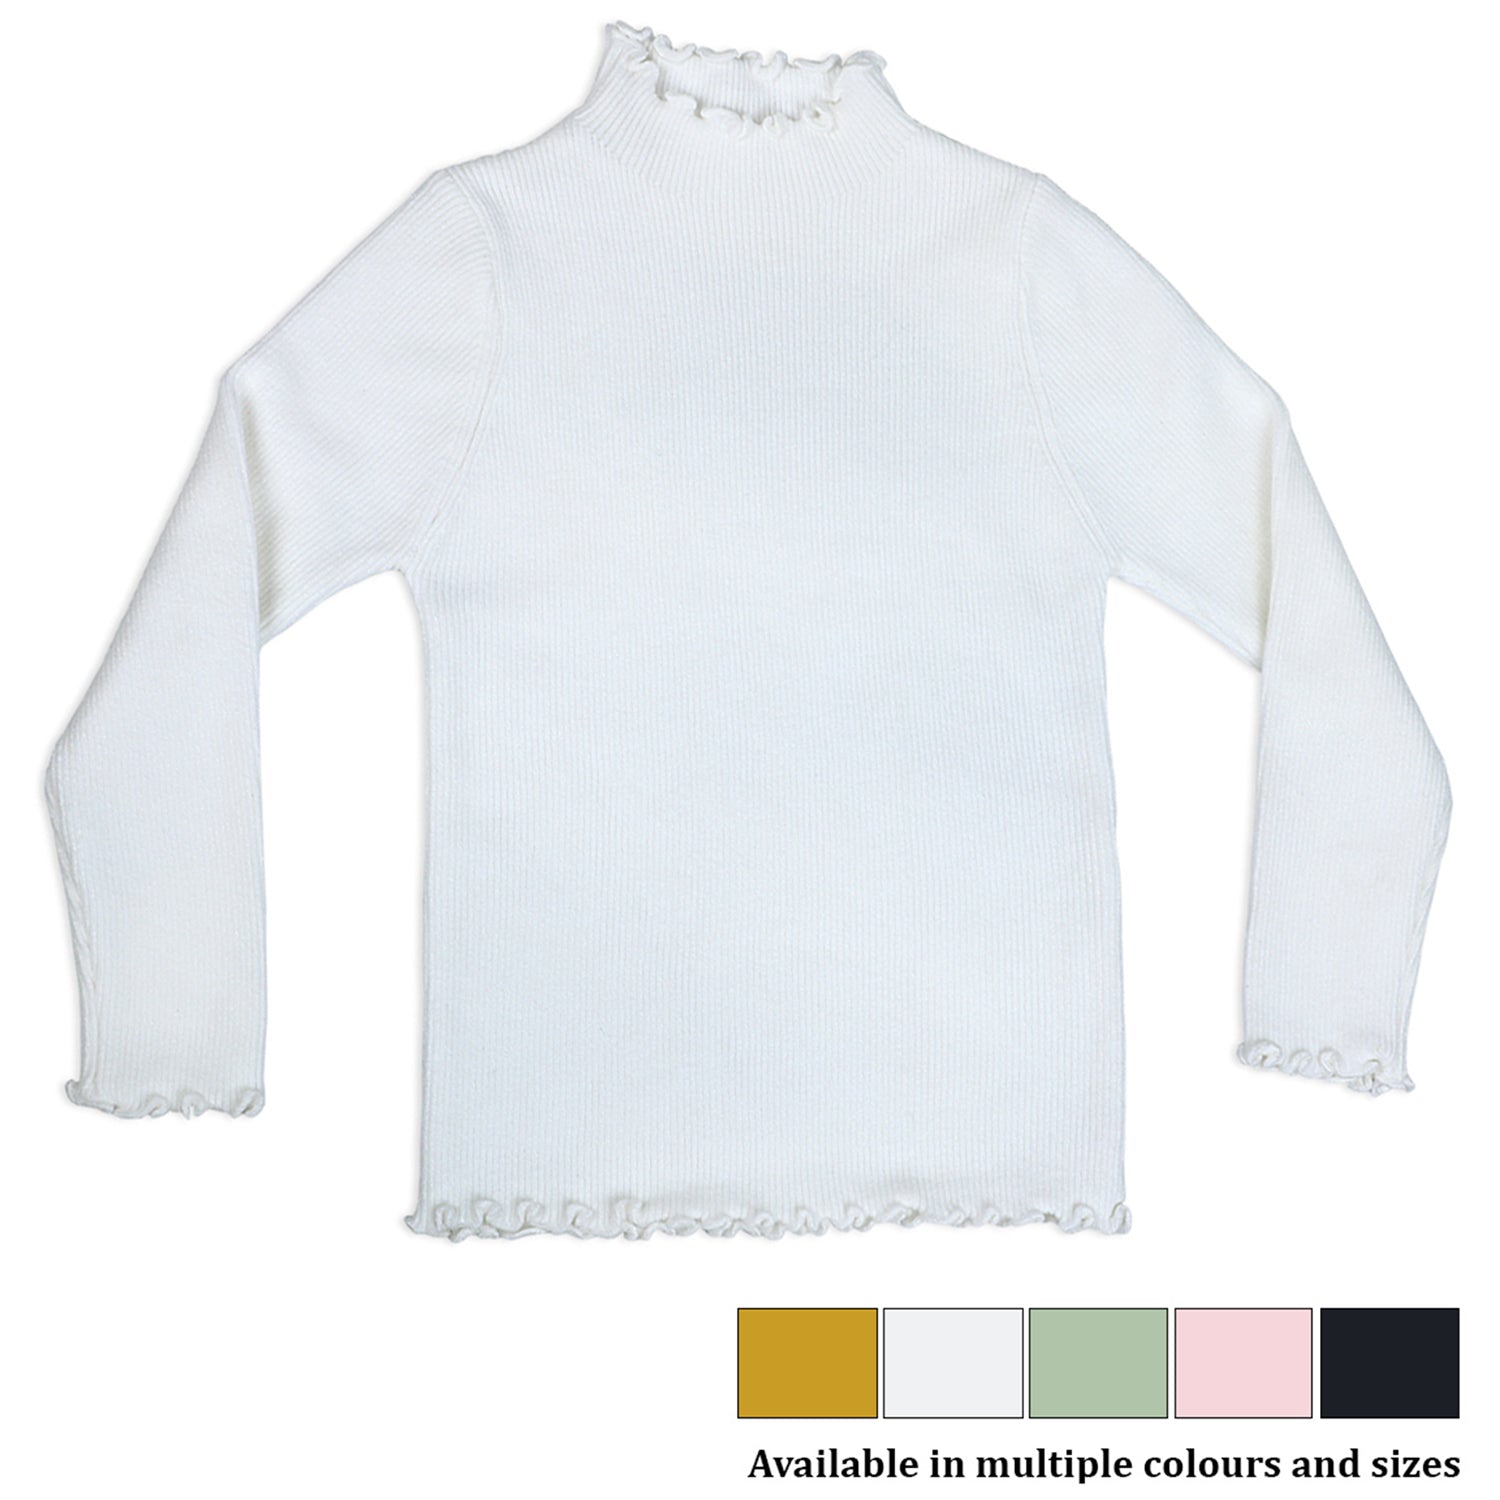 Basic Ribbed Premium Full Sleeves Knitted Kids Sweater - White